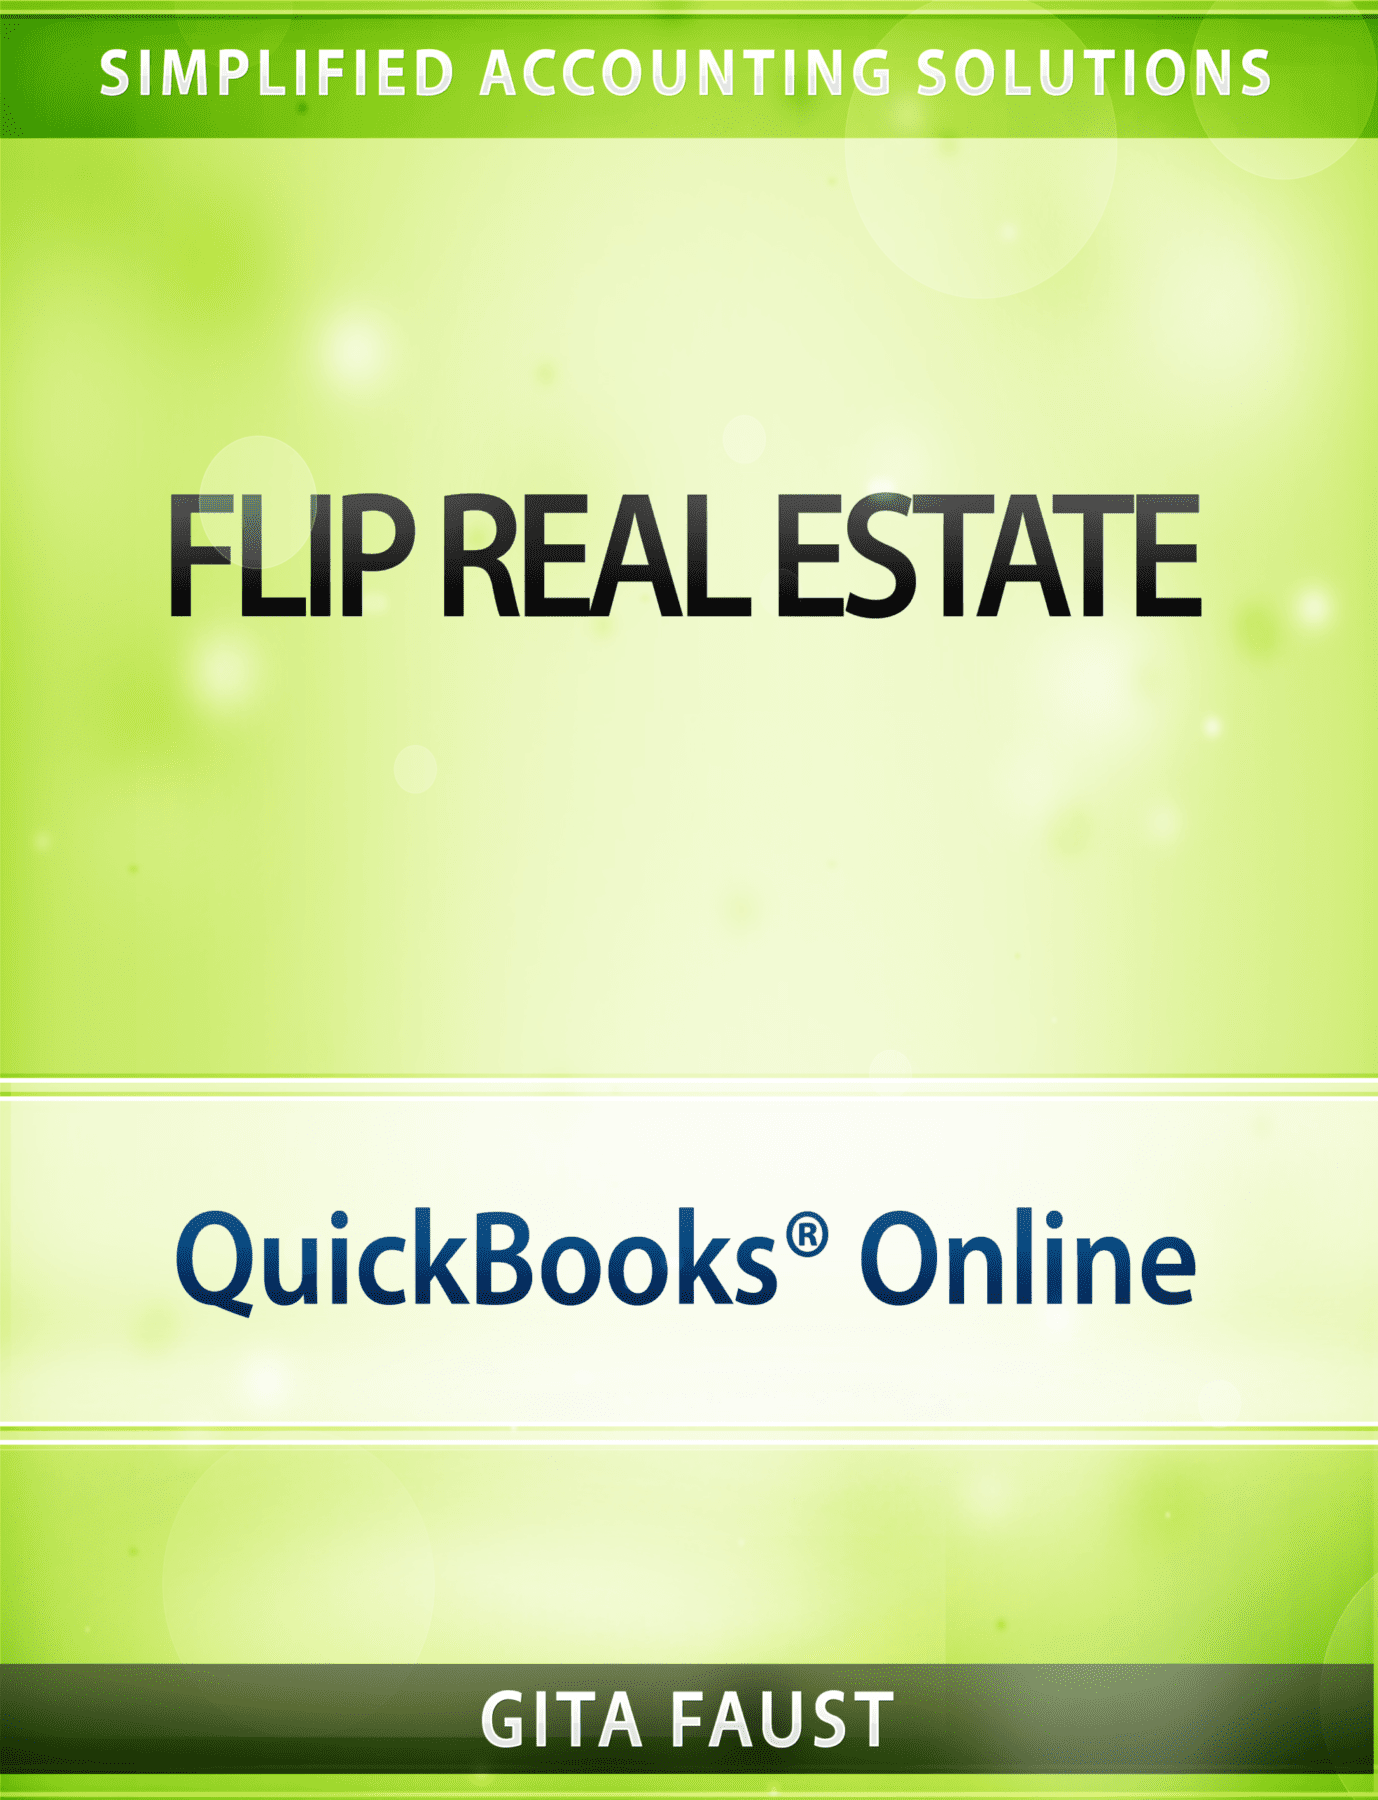 QuickBooks Online for Real Estate Flip